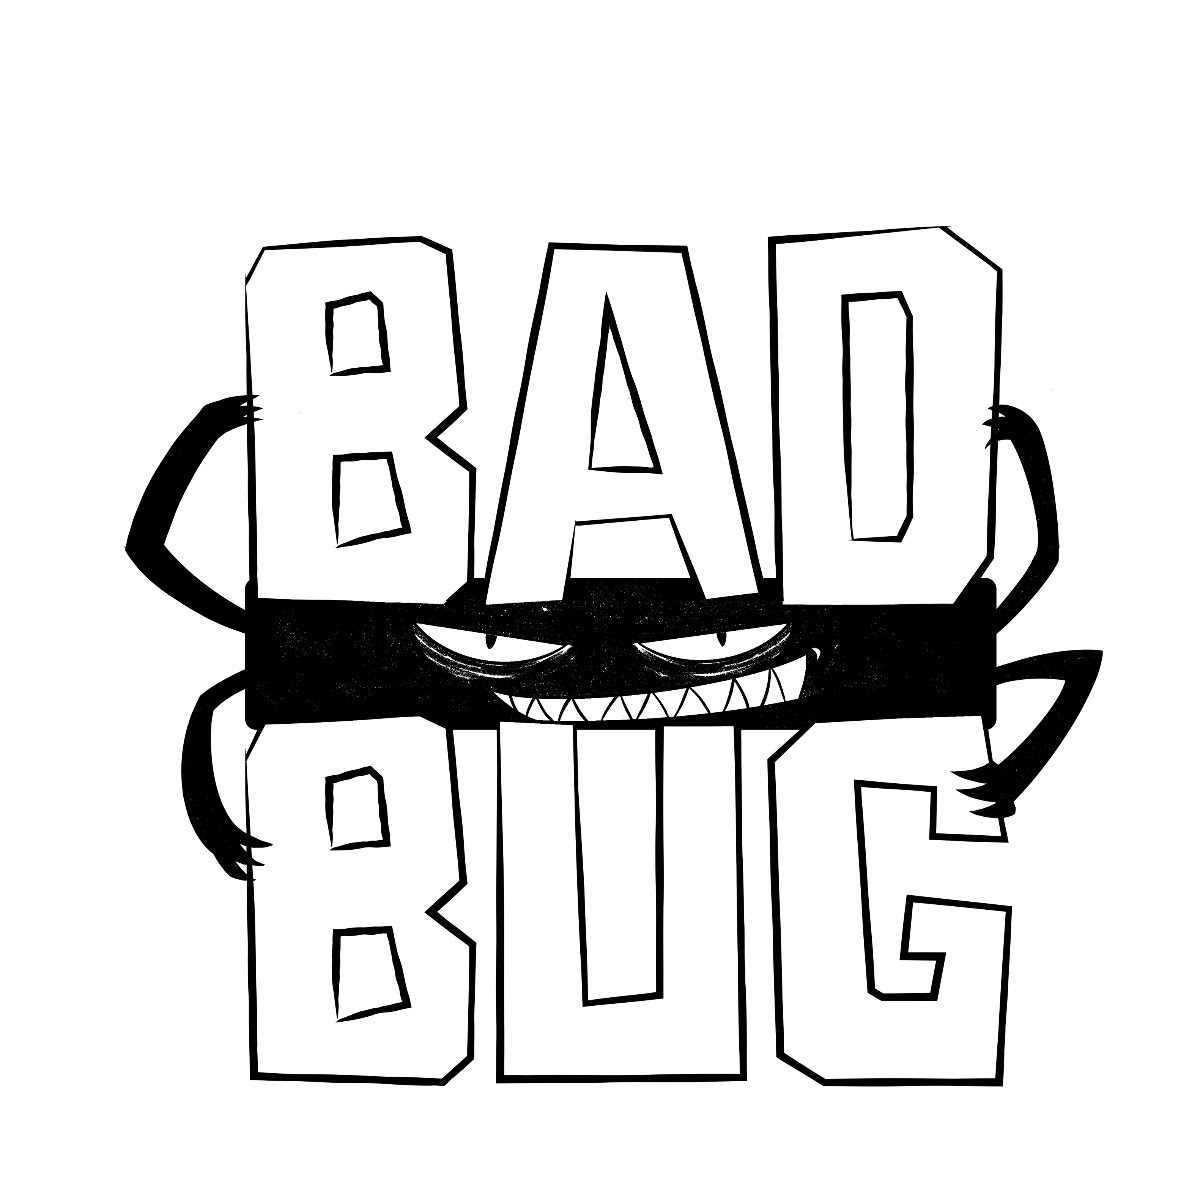 The Bad Bug Newsletter